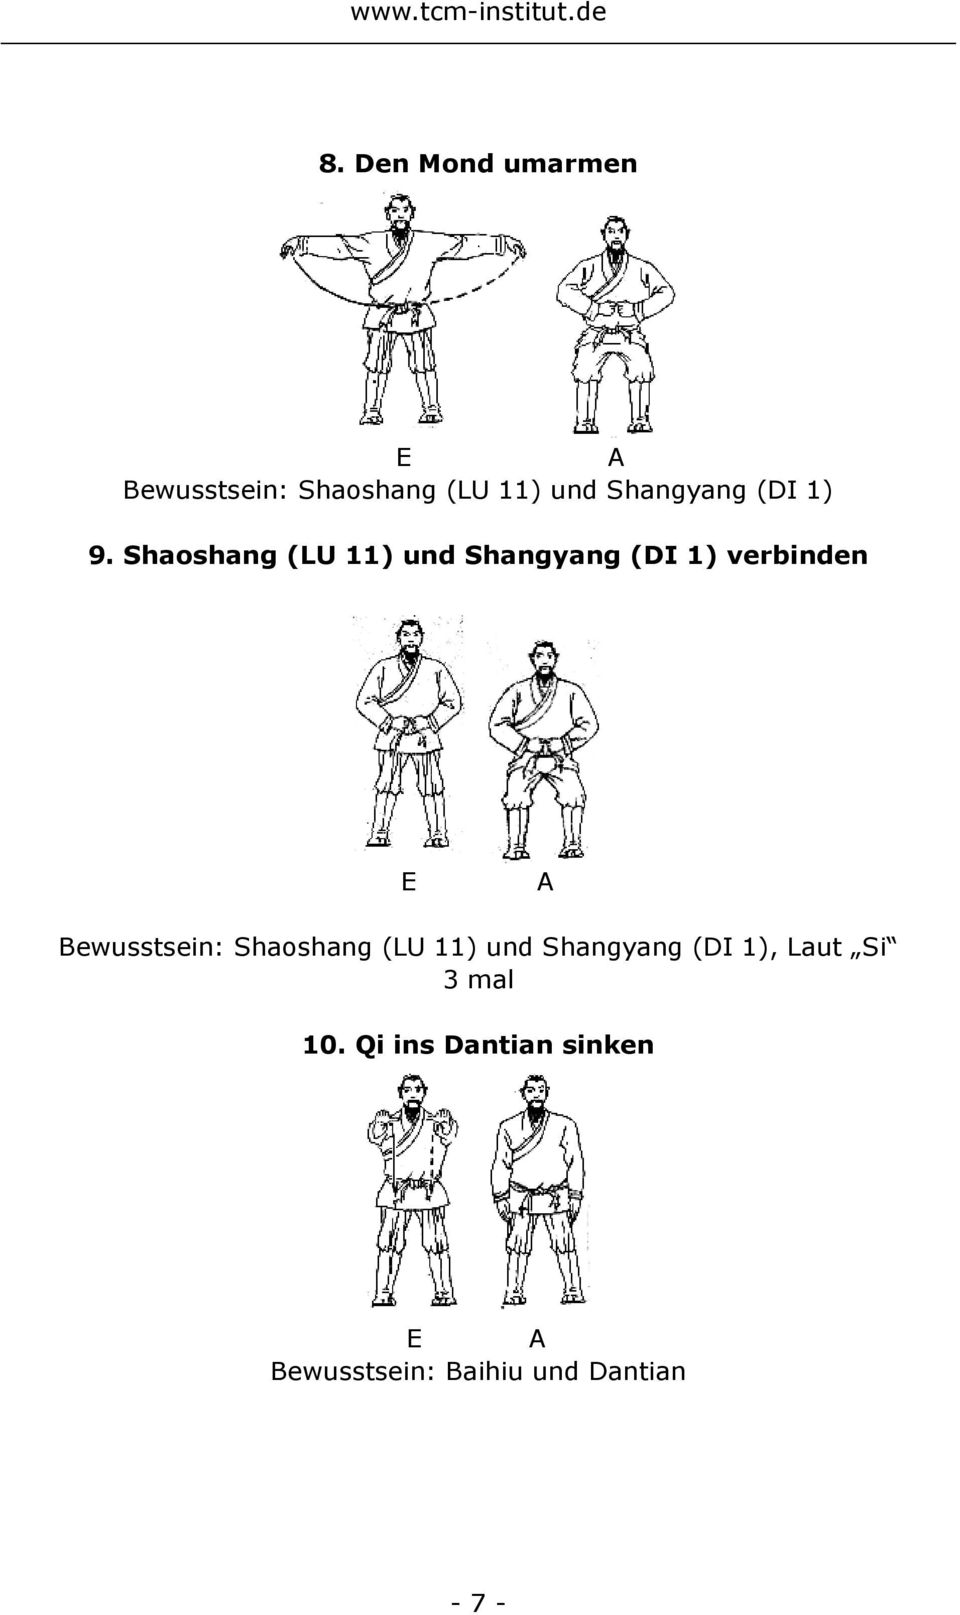 Shaoshang (LU 11) und Shangyang (DI 1) verbinden Bewusstsein: